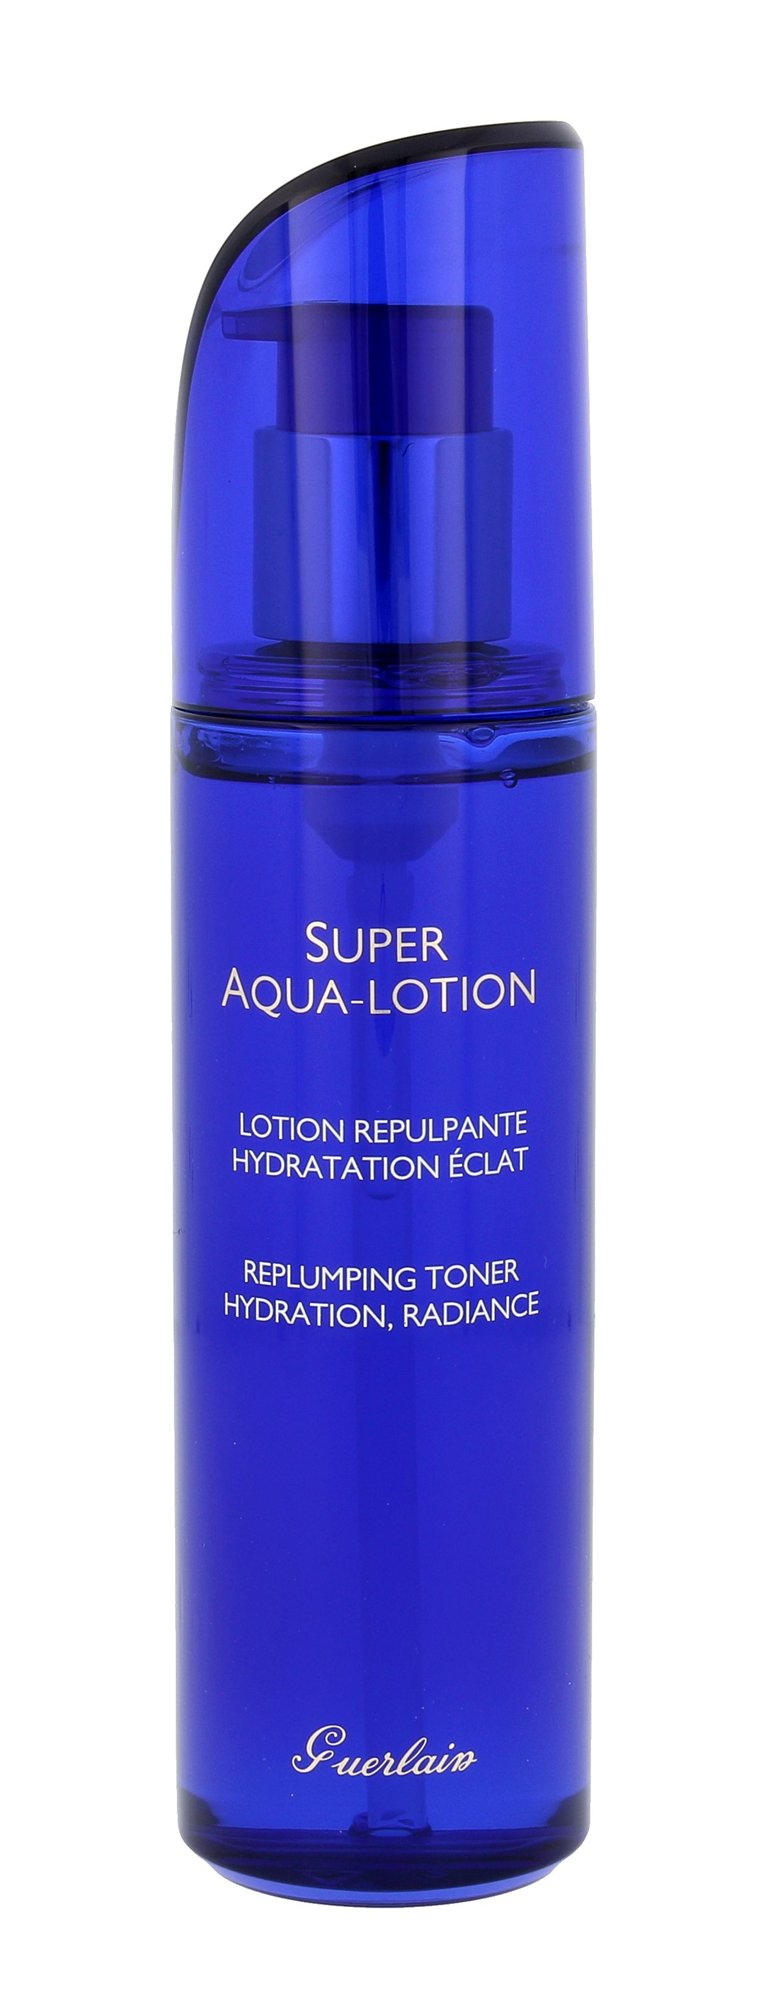 Guerlain Super Aqua Lotion Replumping Toner